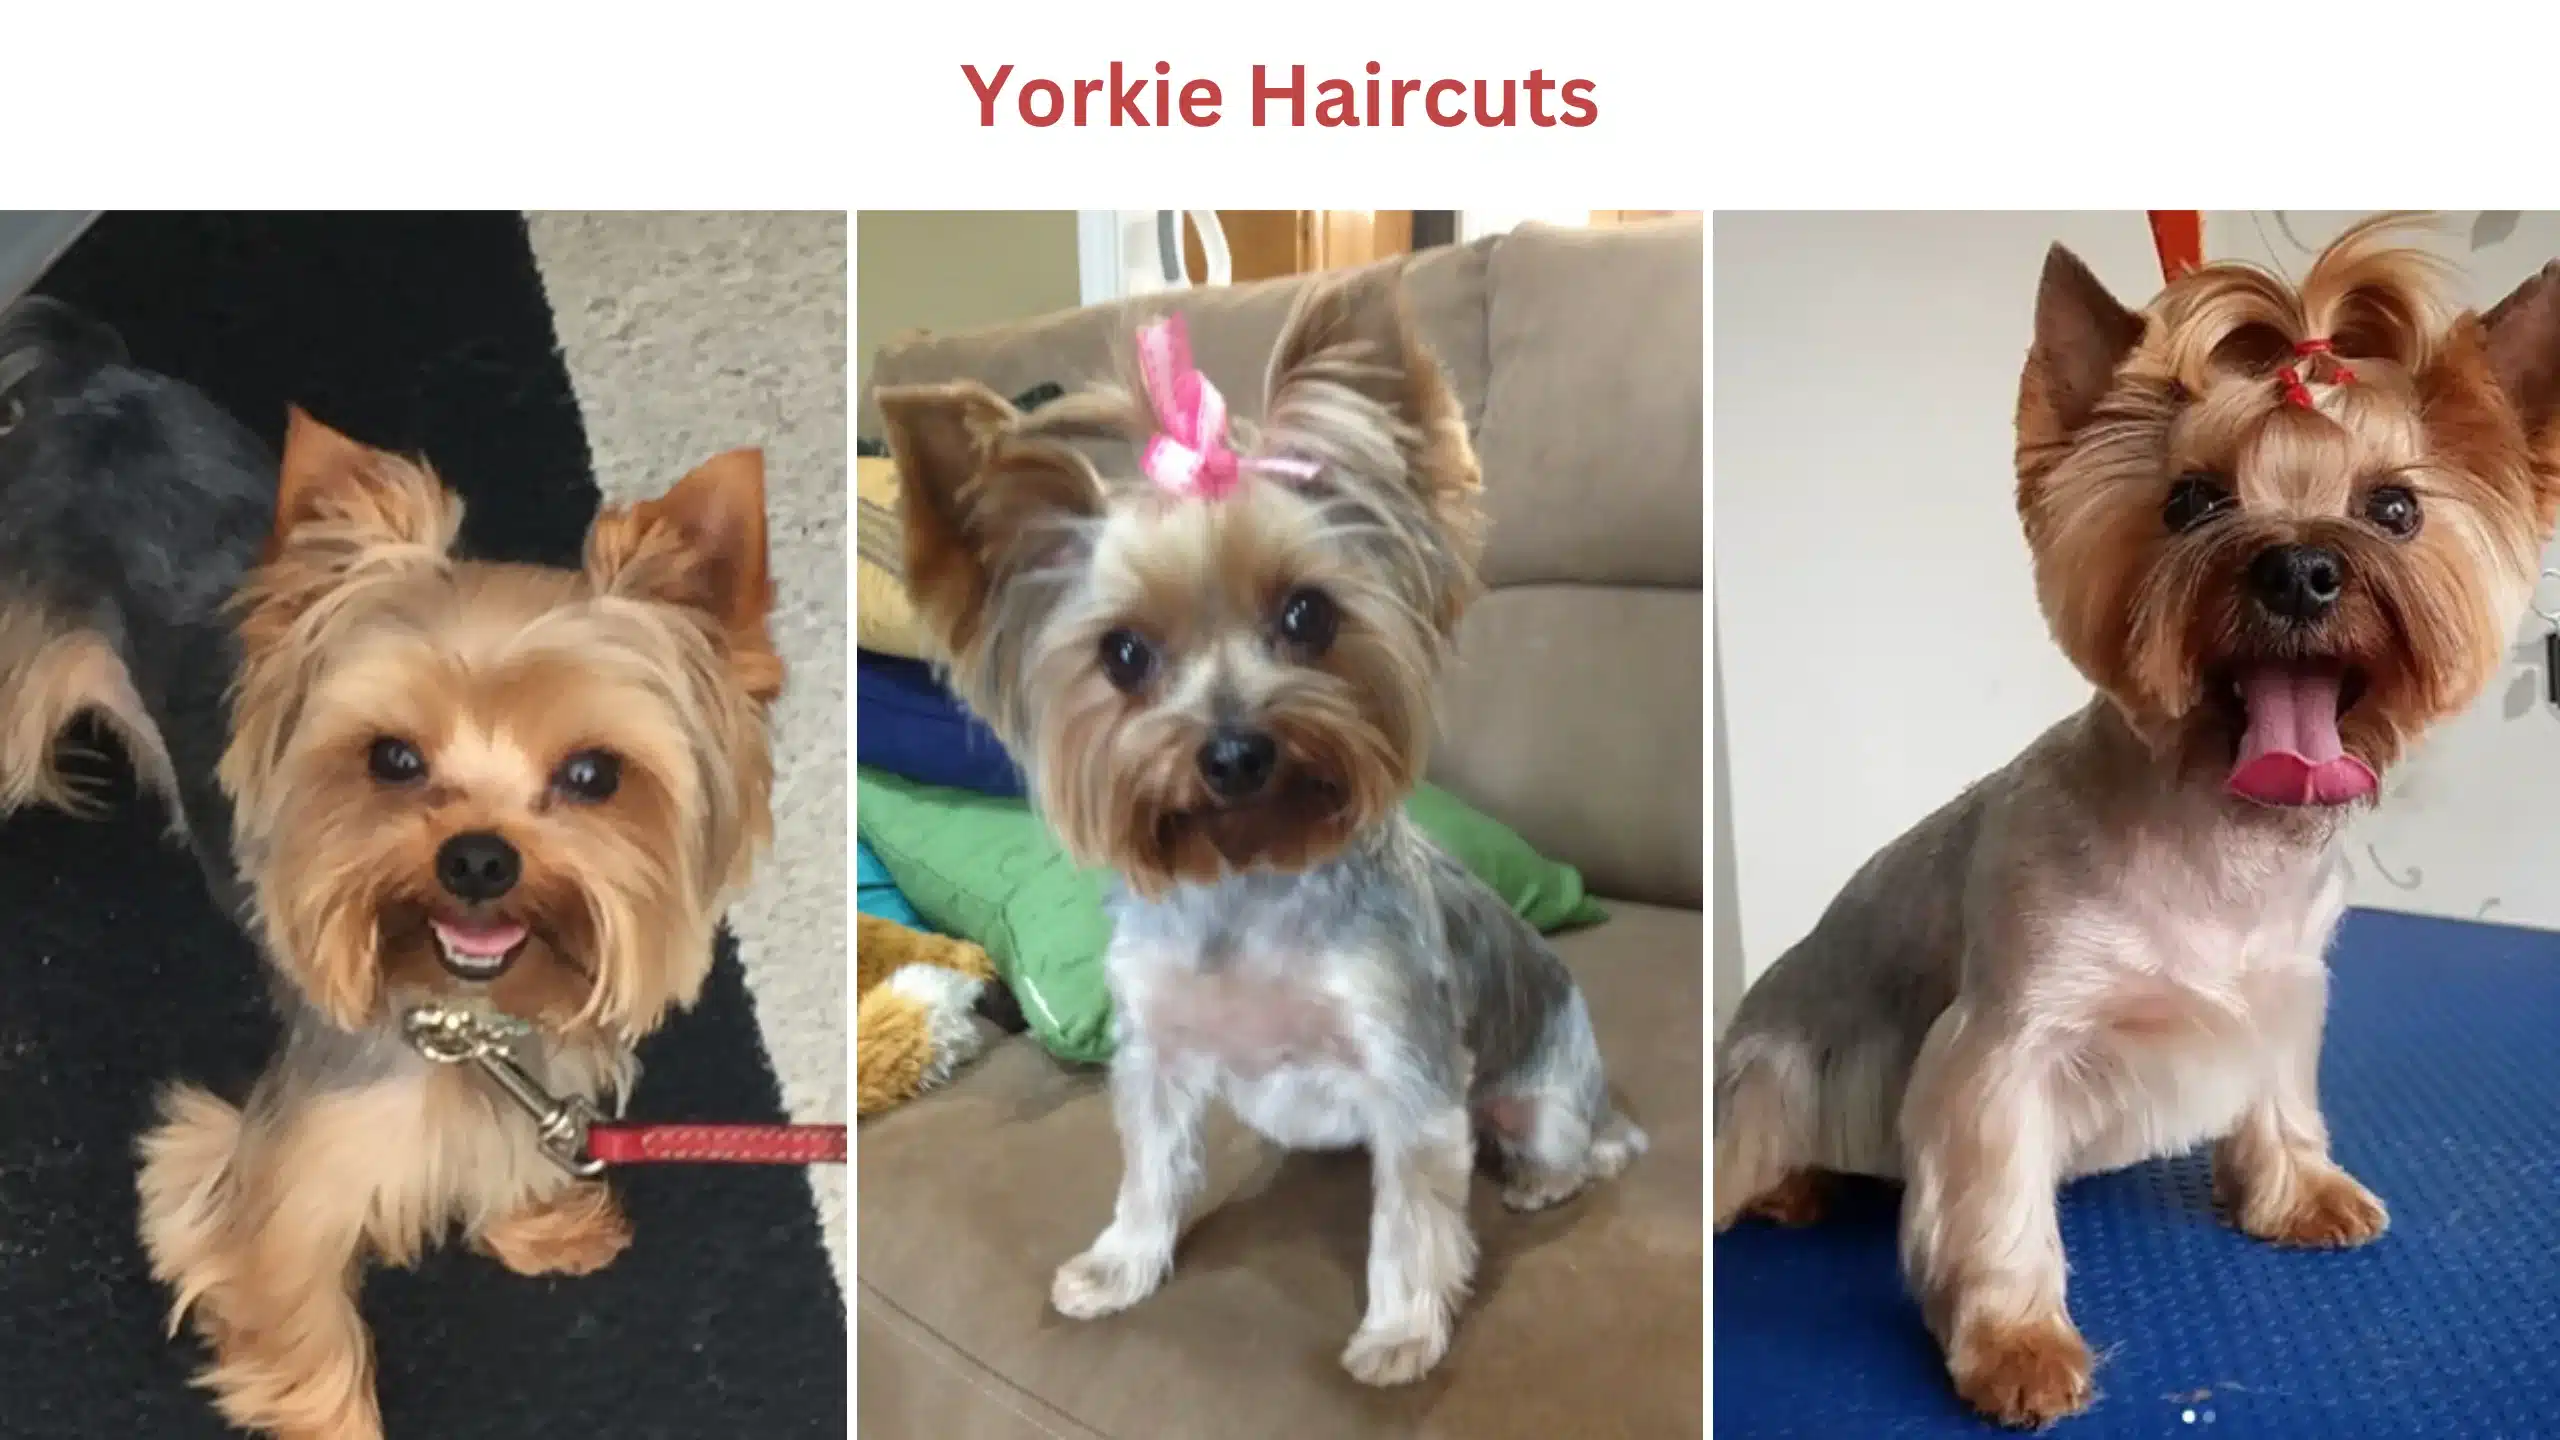 Yorkie haircuts